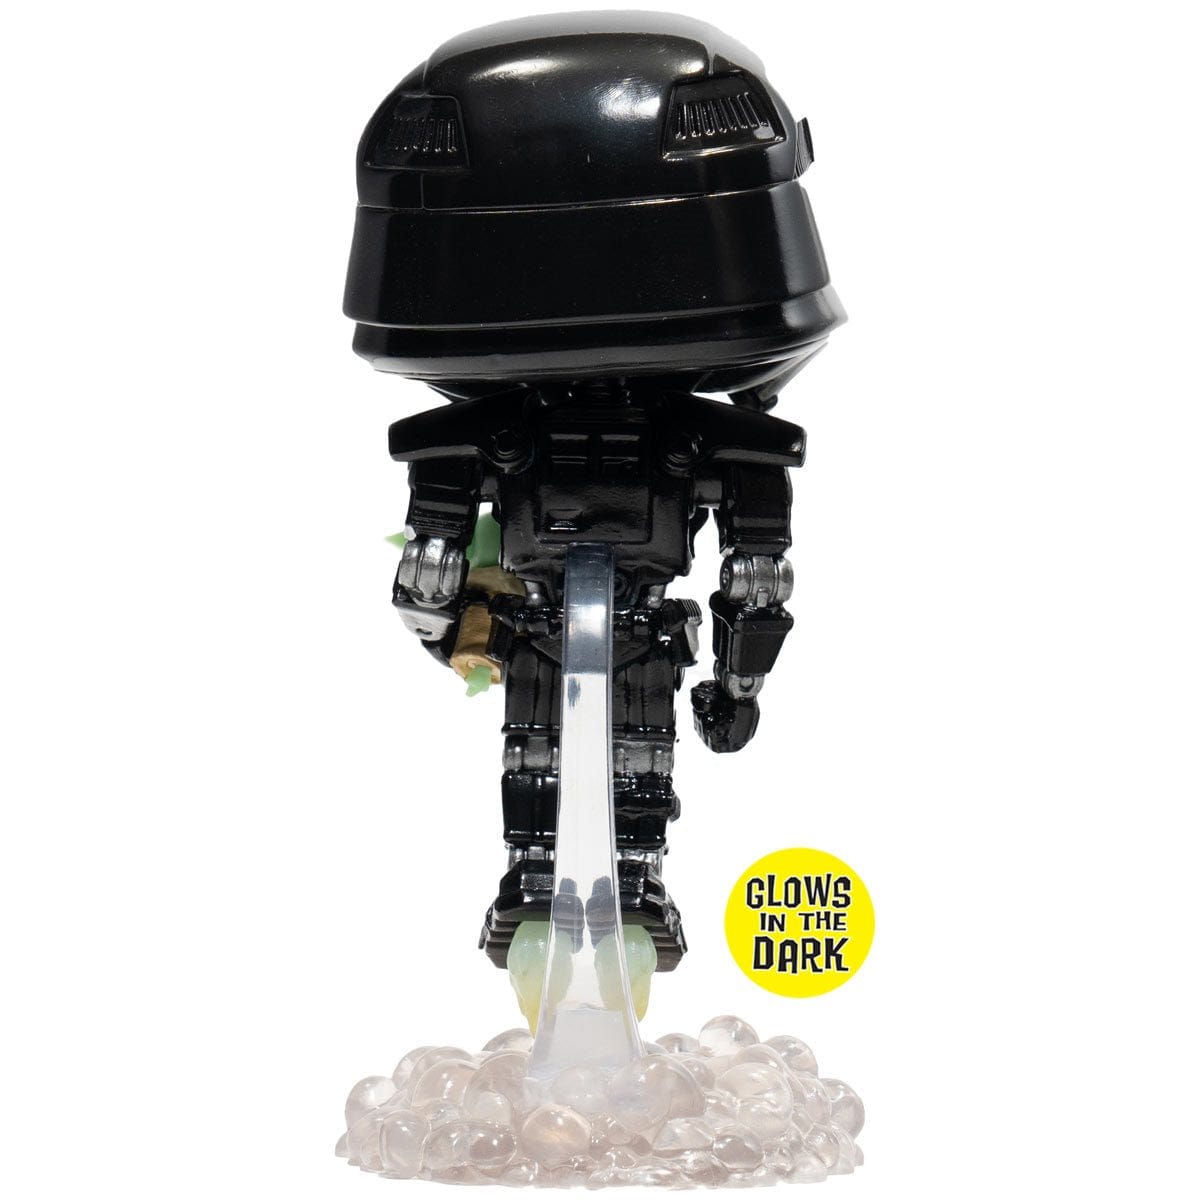 Star Wars: The Mandalorian Dark Trooper with Grogu Glow in the Dark Pop! Vinyl Figure - Entertainment Earth Exclusive